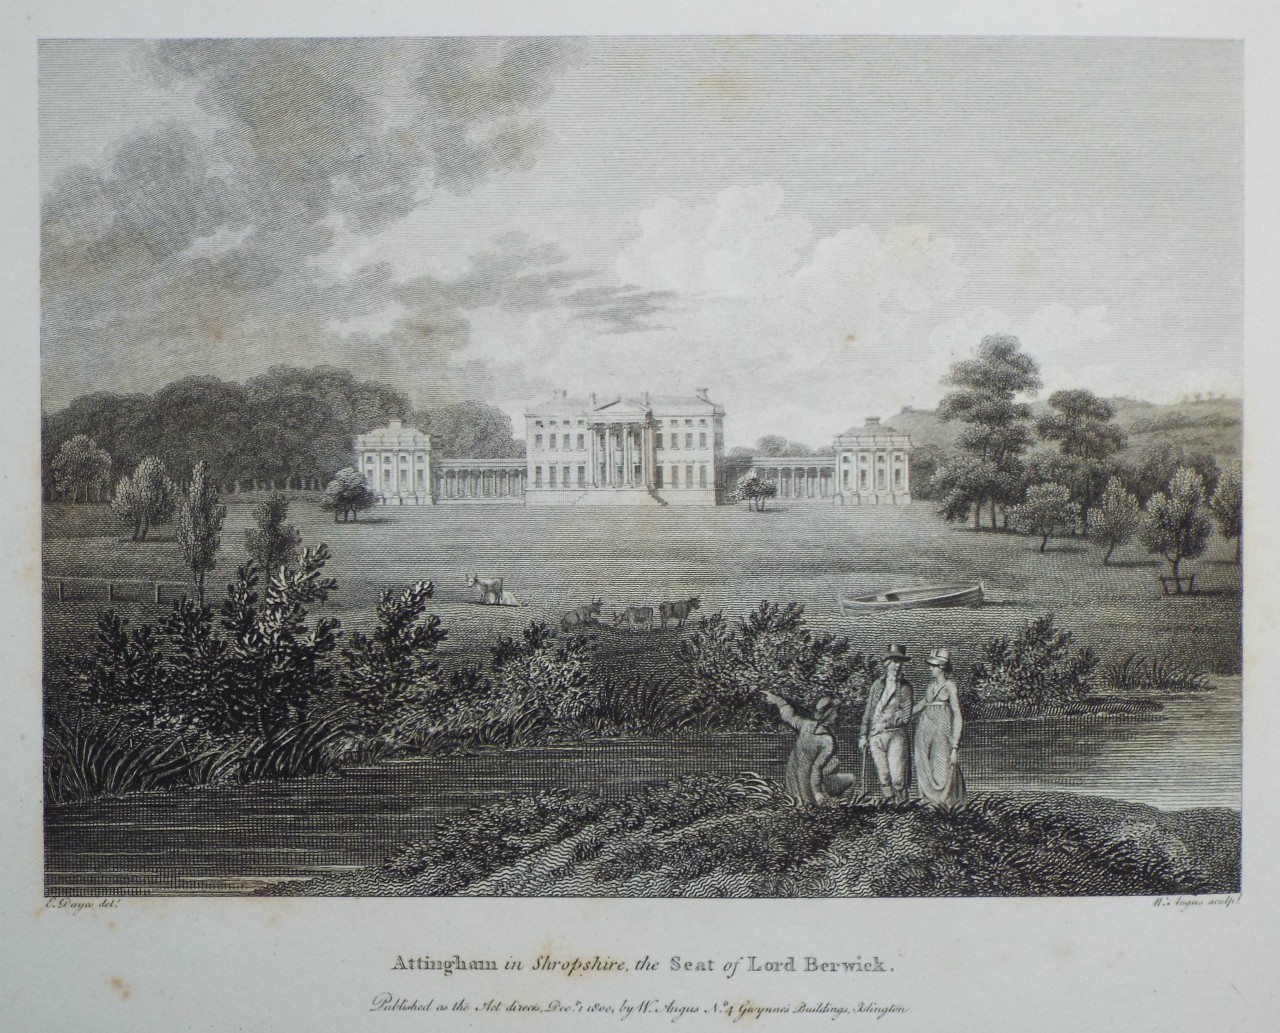 Print - Attingham in Shropshire, the Seat of Lord Berwick. - Angus